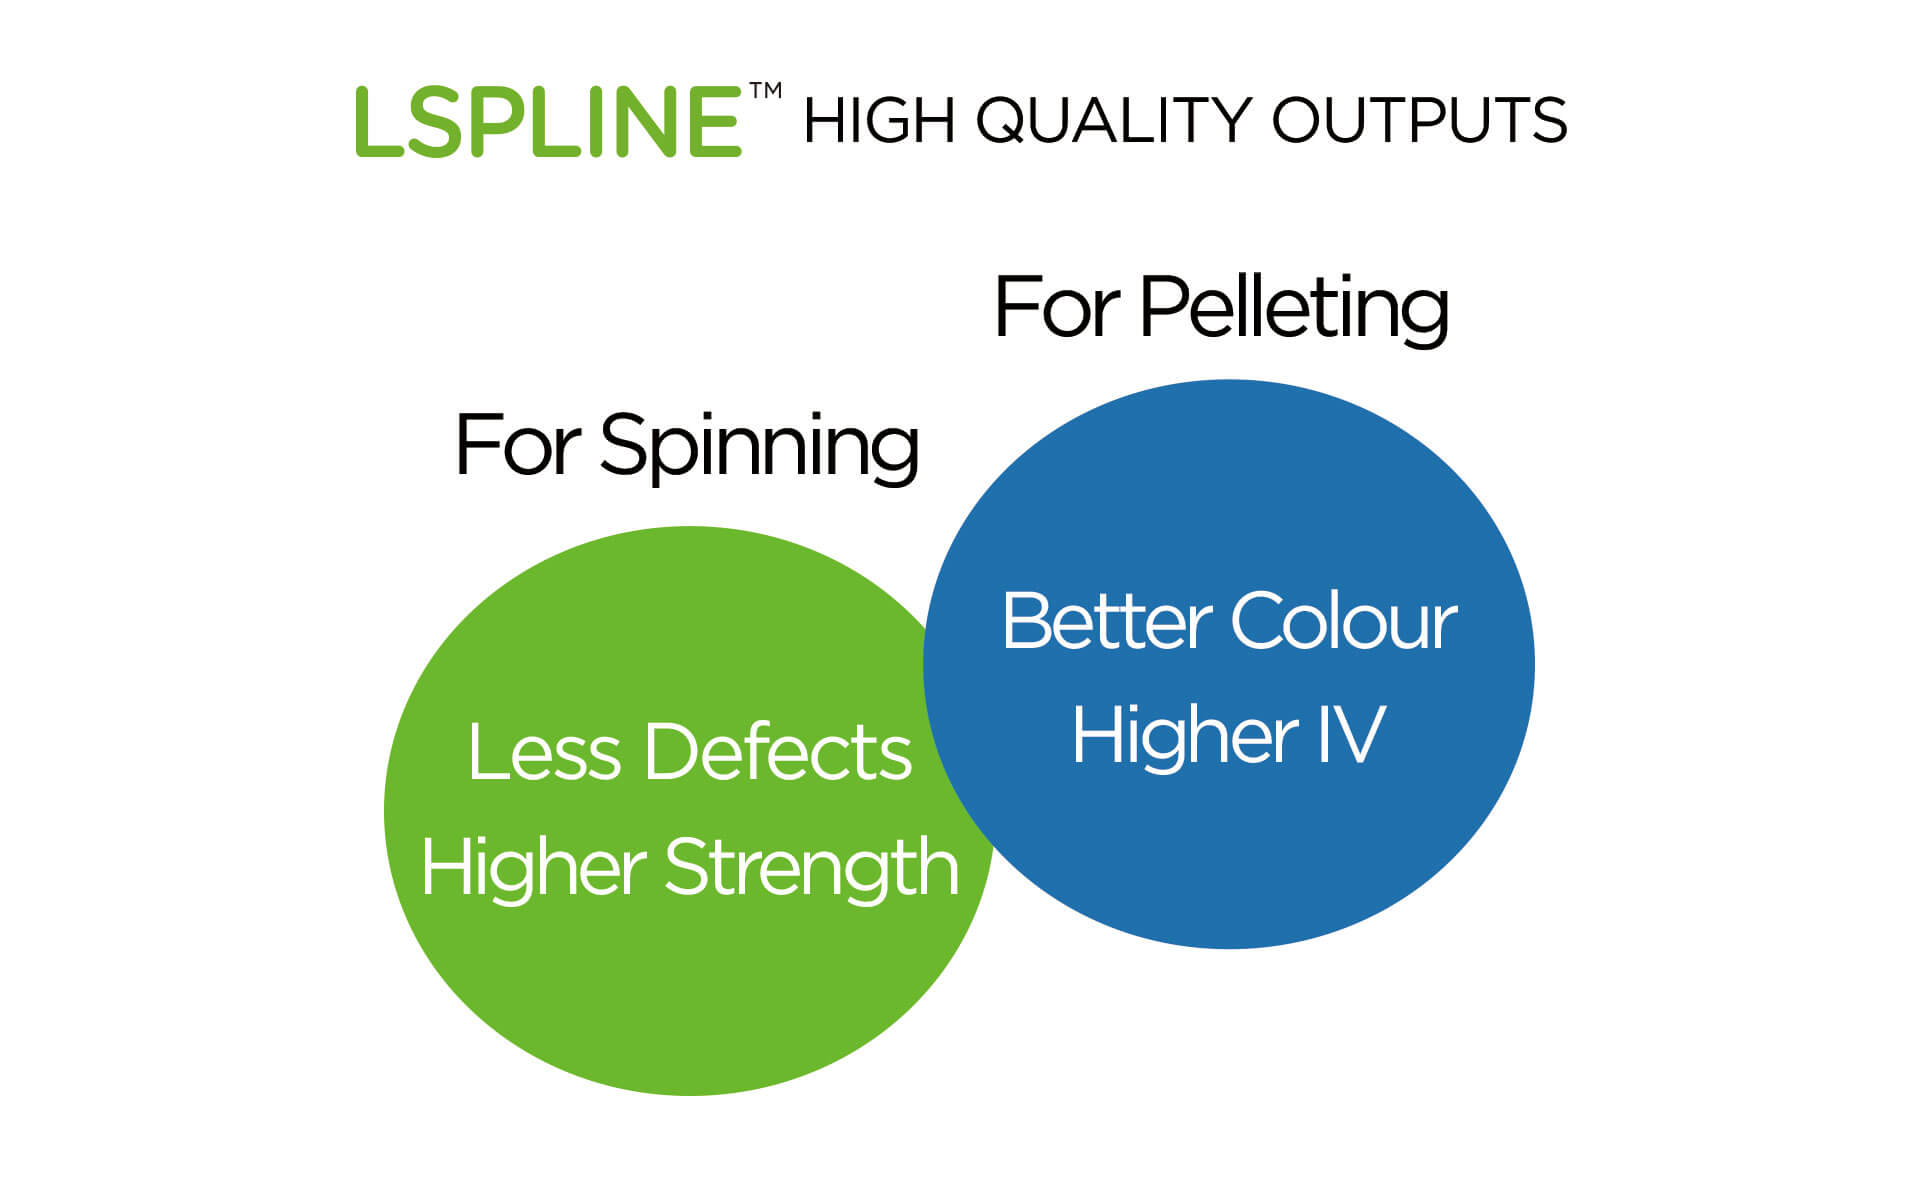 LSPLINE high quality output